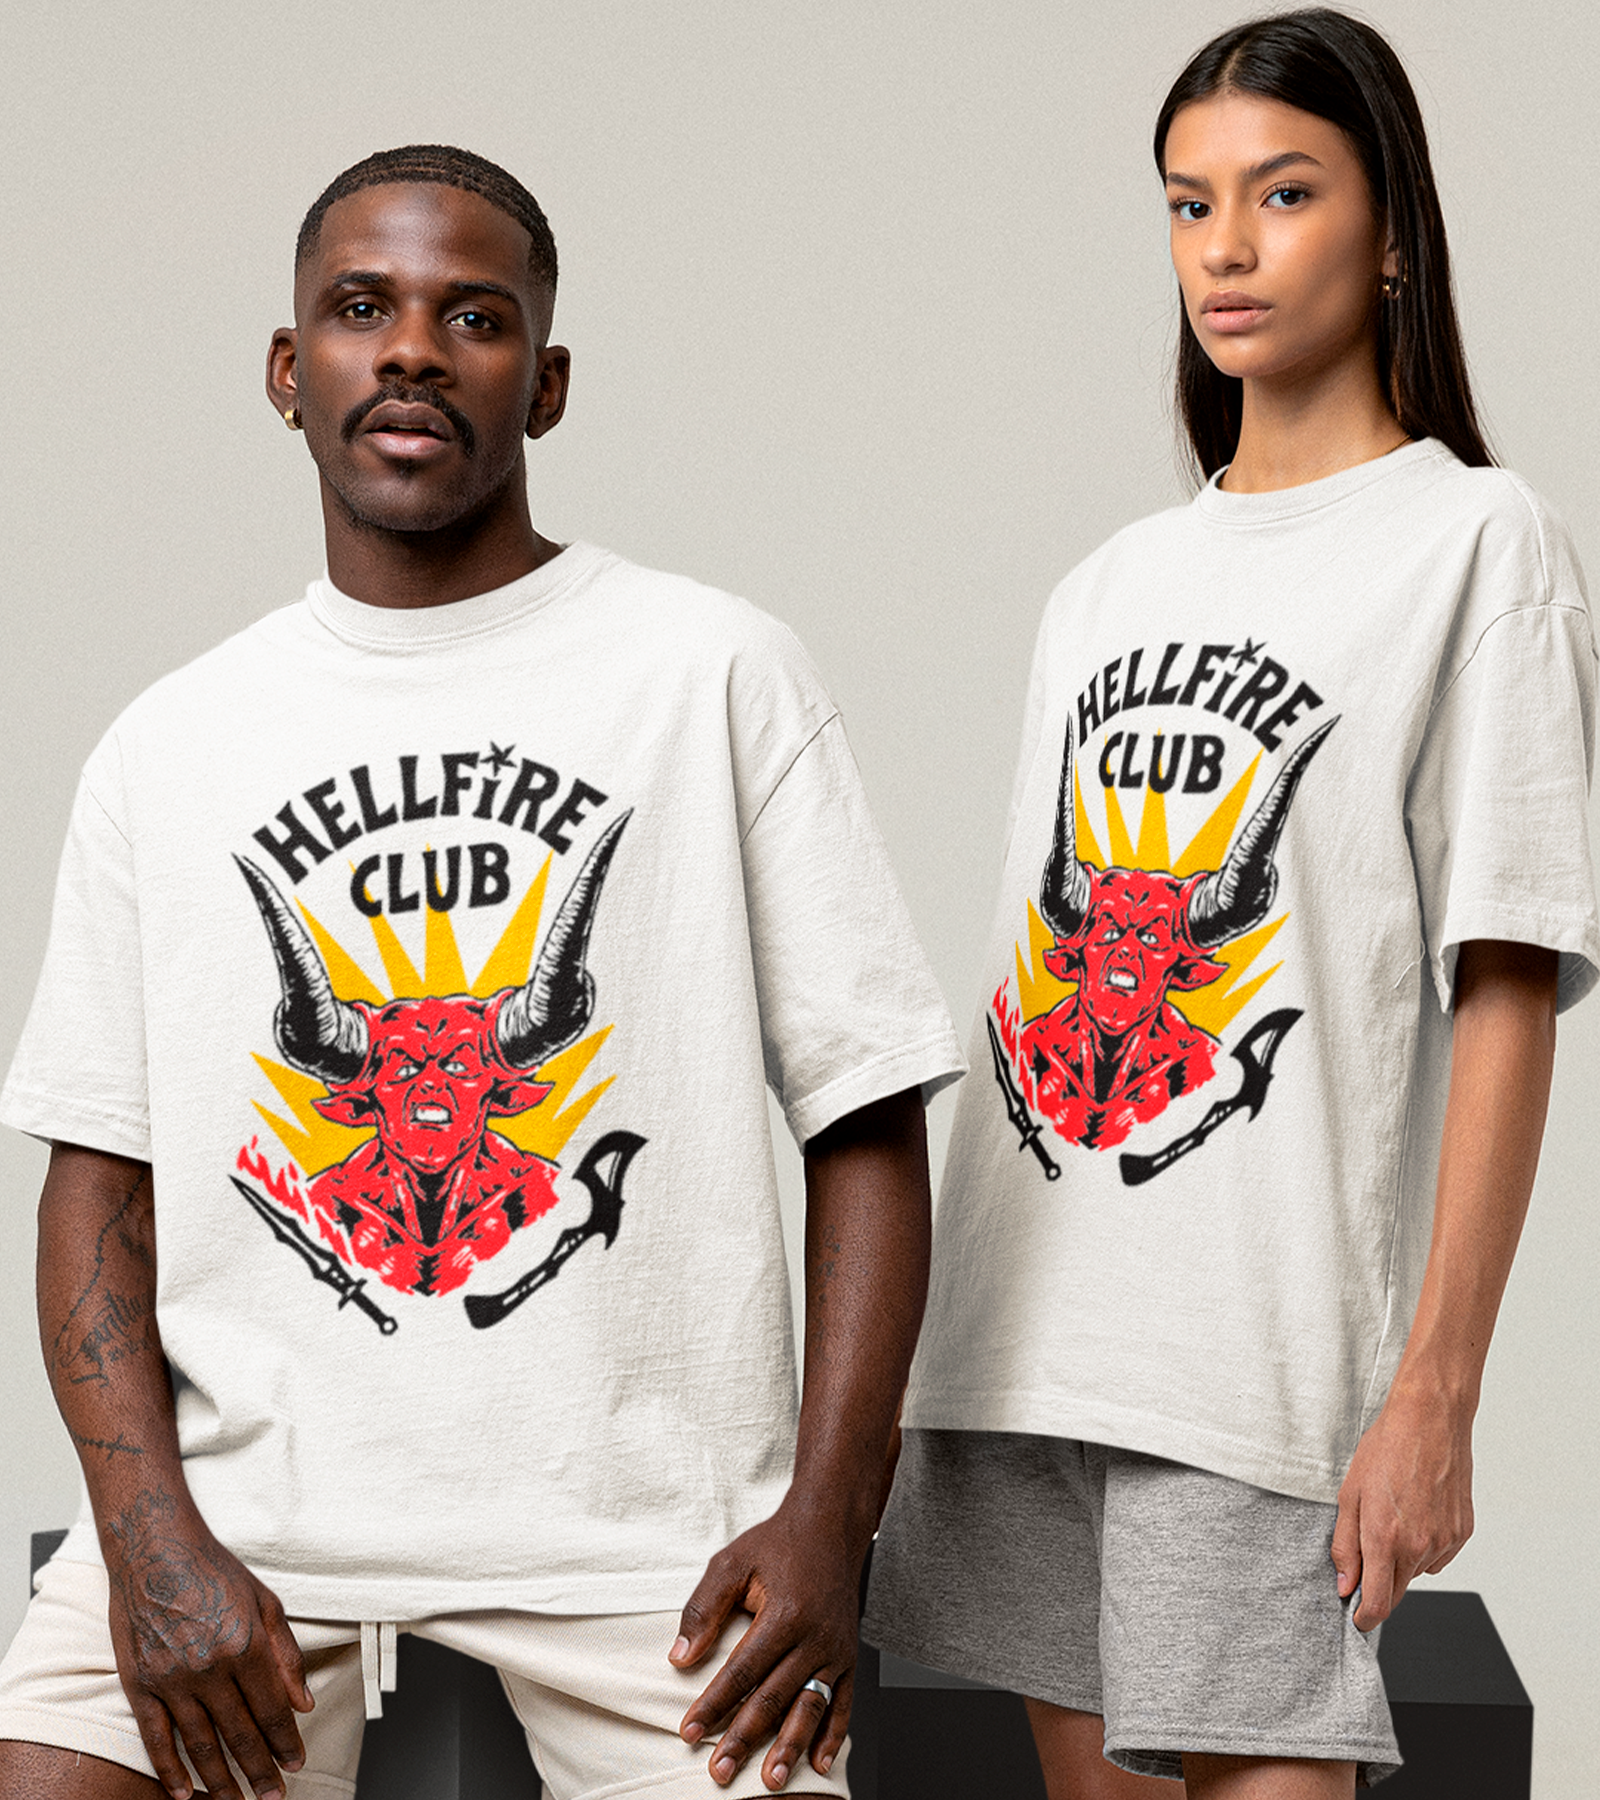 Polera Hellfire Club Deemon